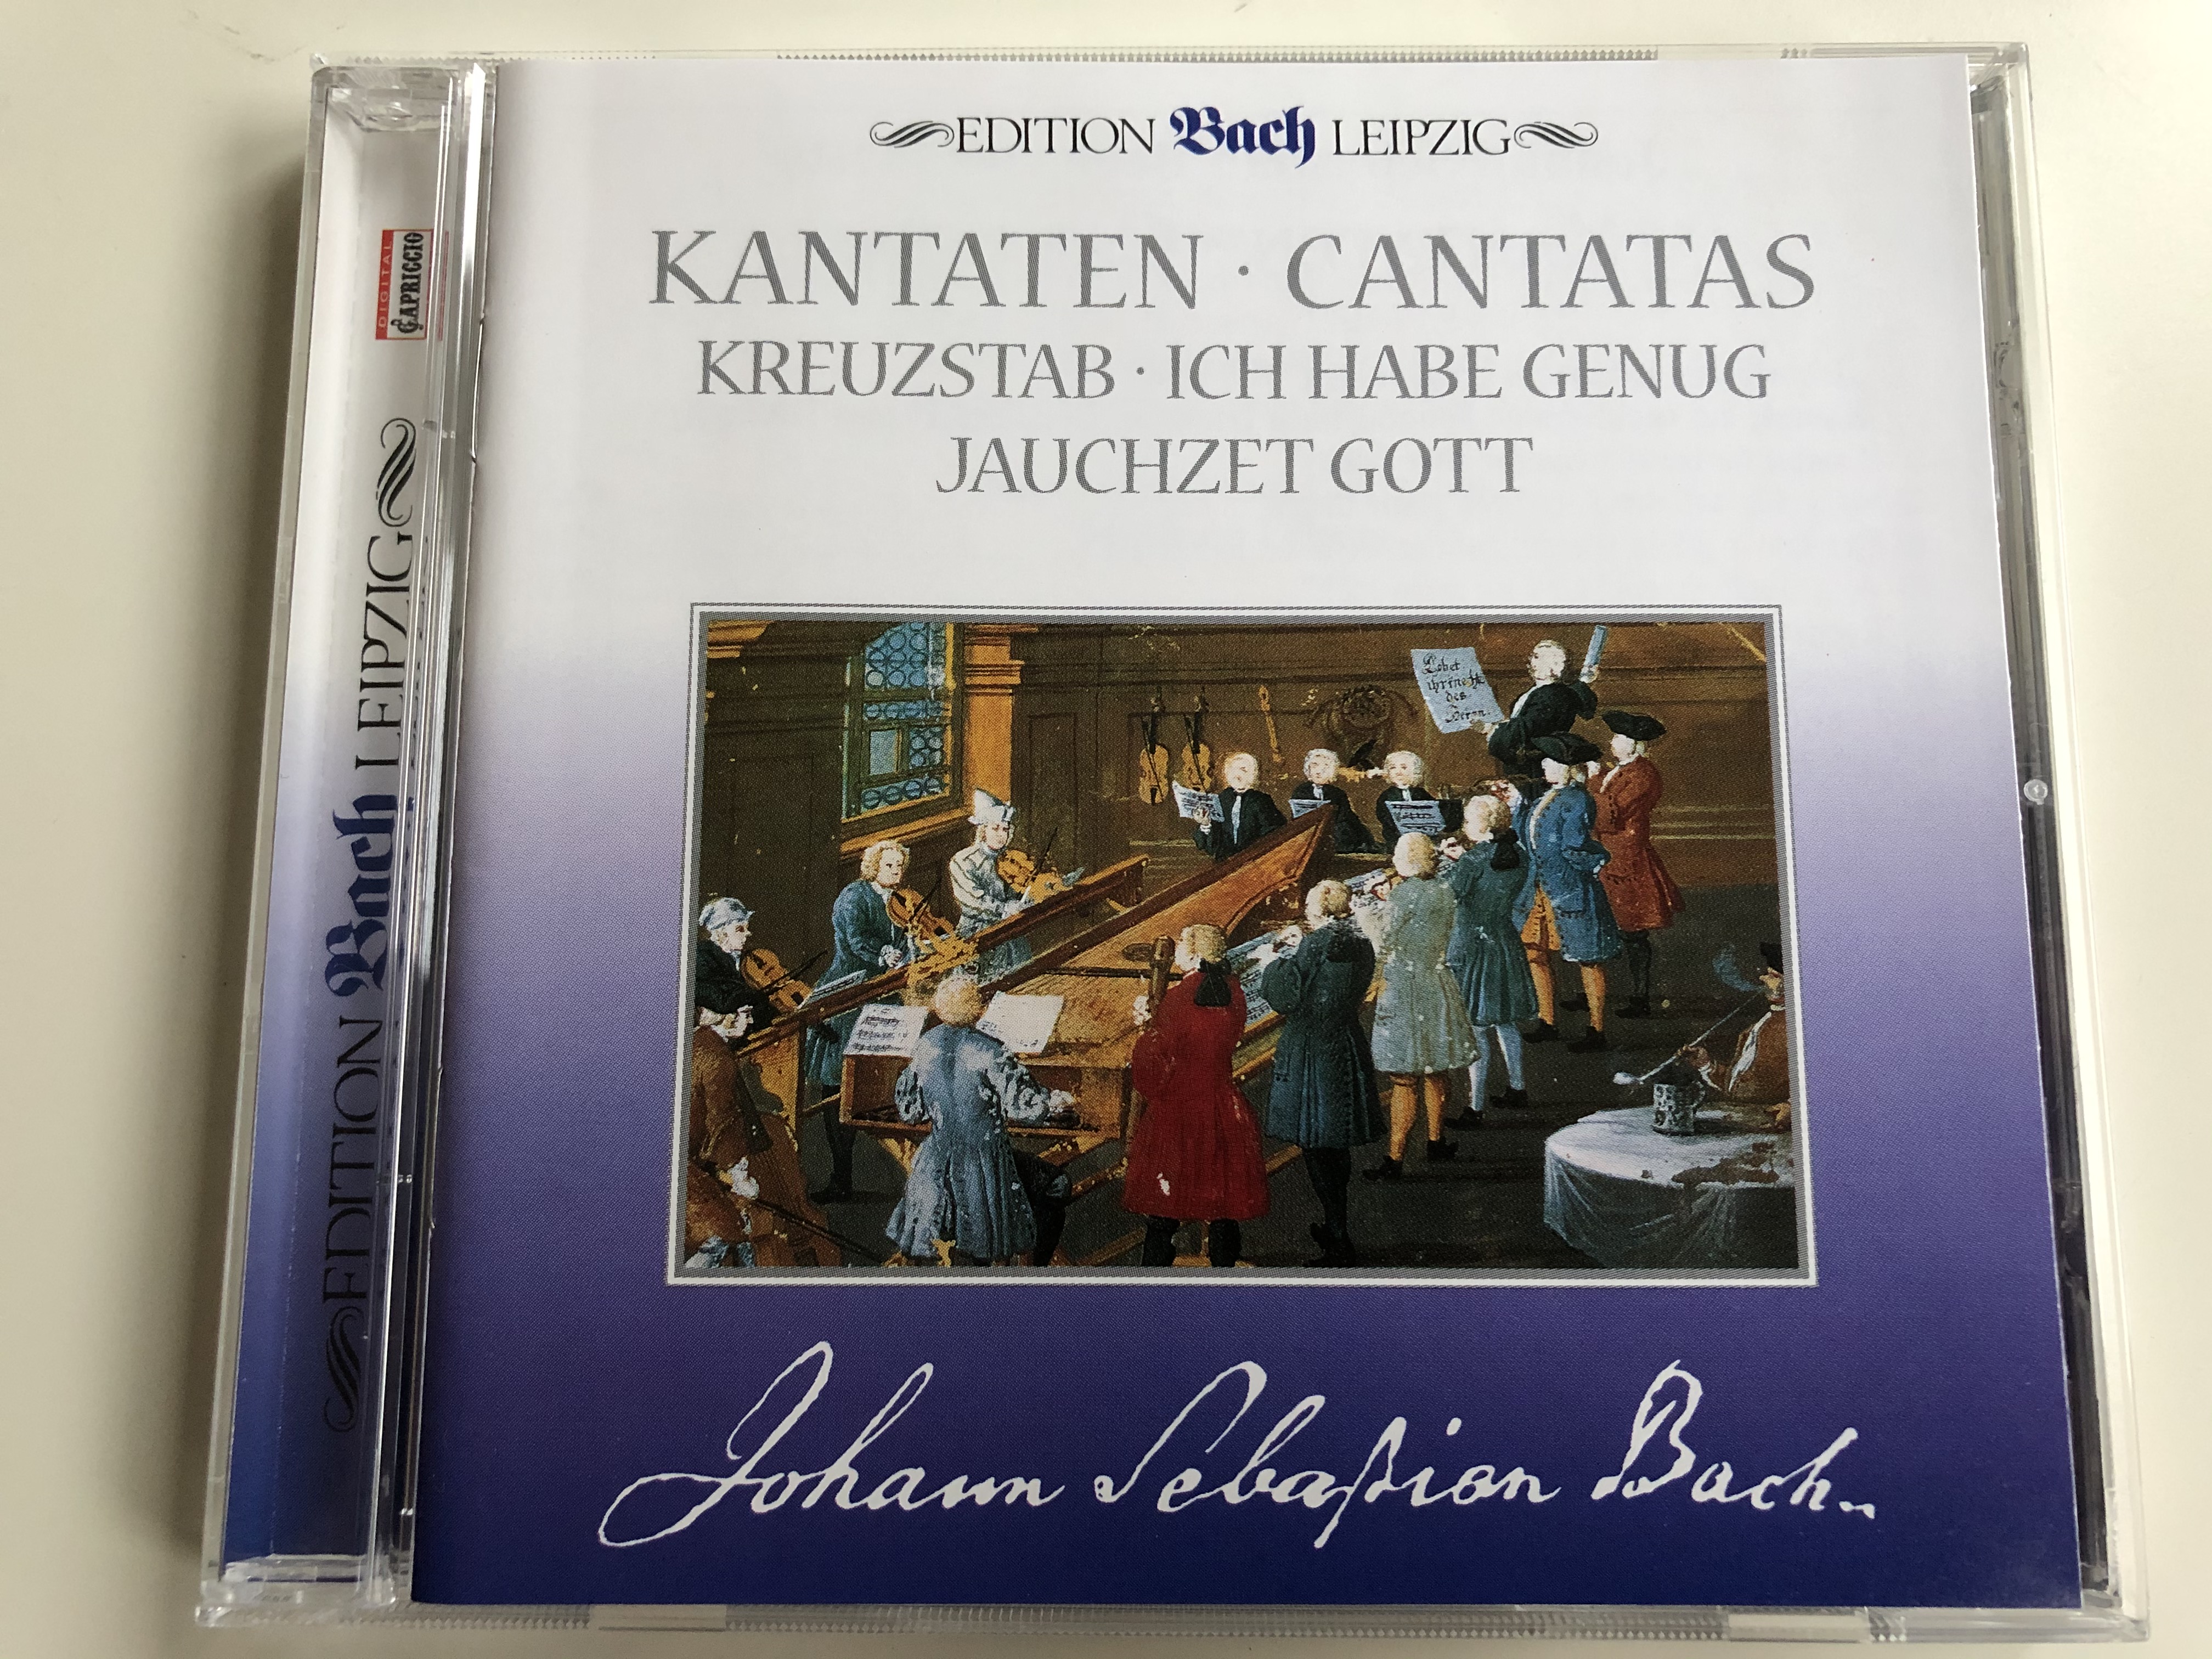 cantatas-kreuzstab-ich-habe-genug-jauchzet-gott-johann-sebastian-bach-edition-bach-leipzig-delta-audio-cd-1999-stereo-49-259-7-1-.jpg